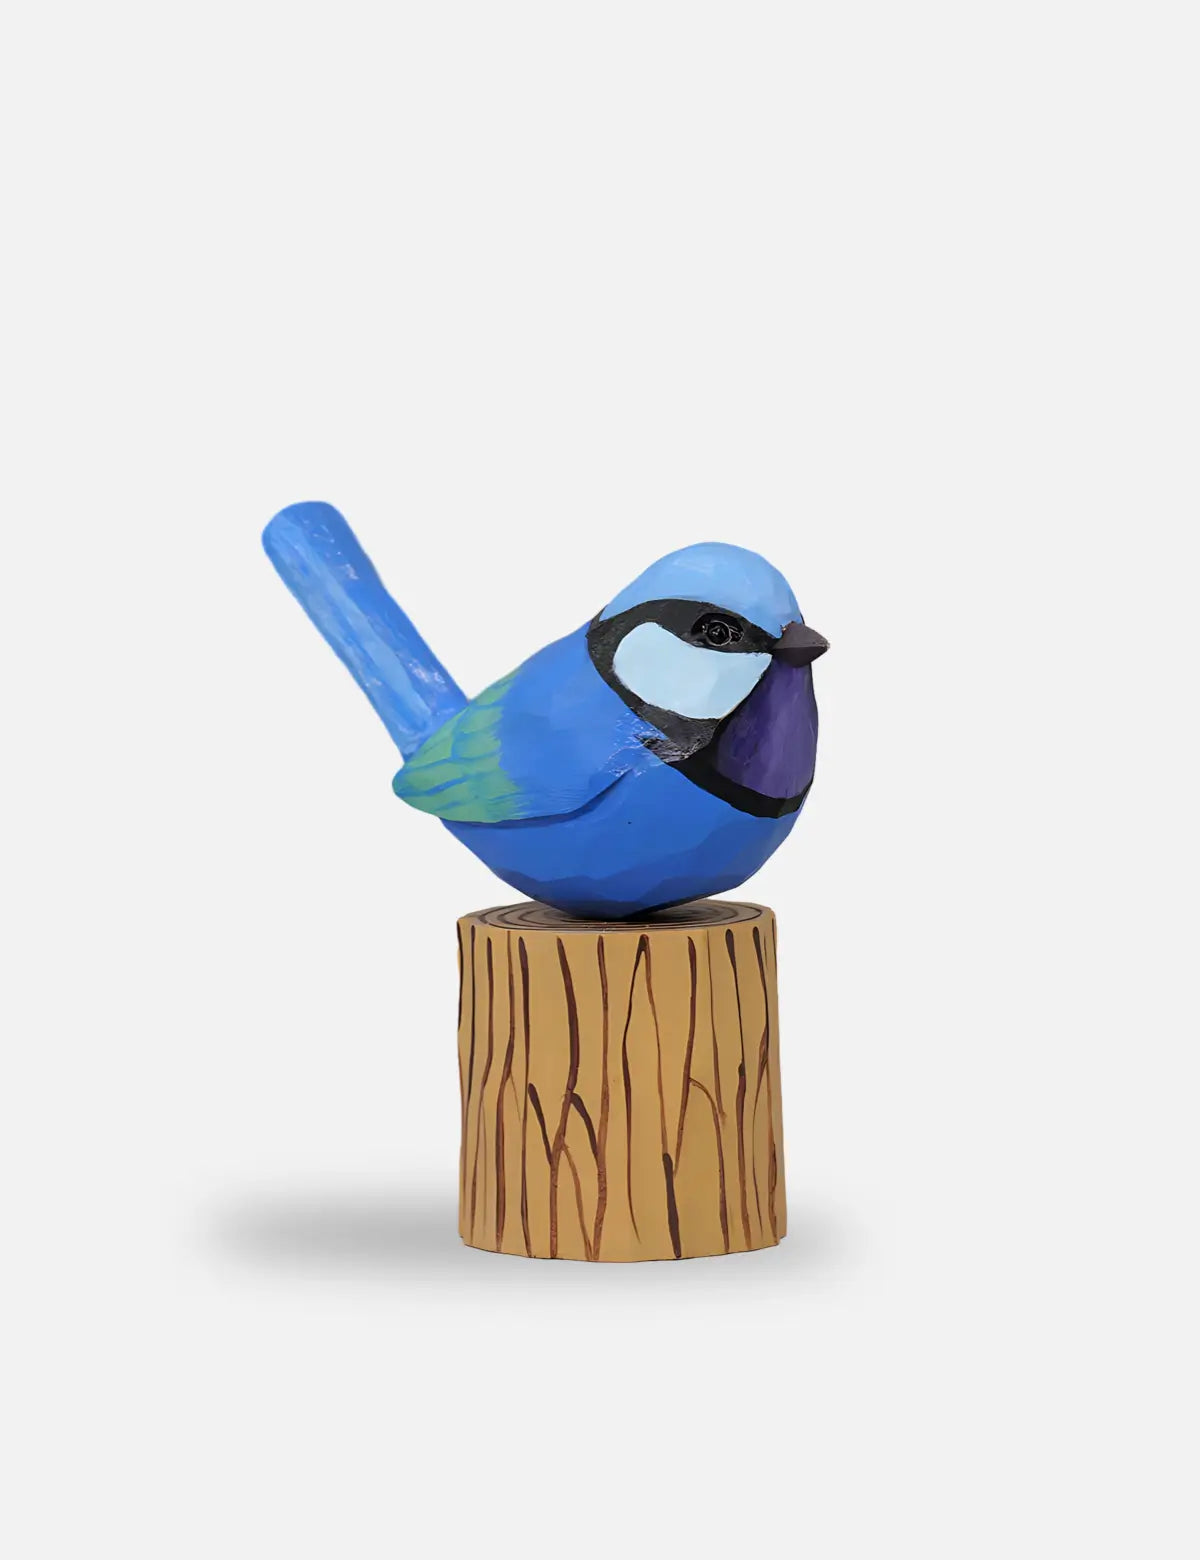 Handcrafted Splendid Fairywren Wooden Bird Sculpture on Stump by WoodenWhimsy -01